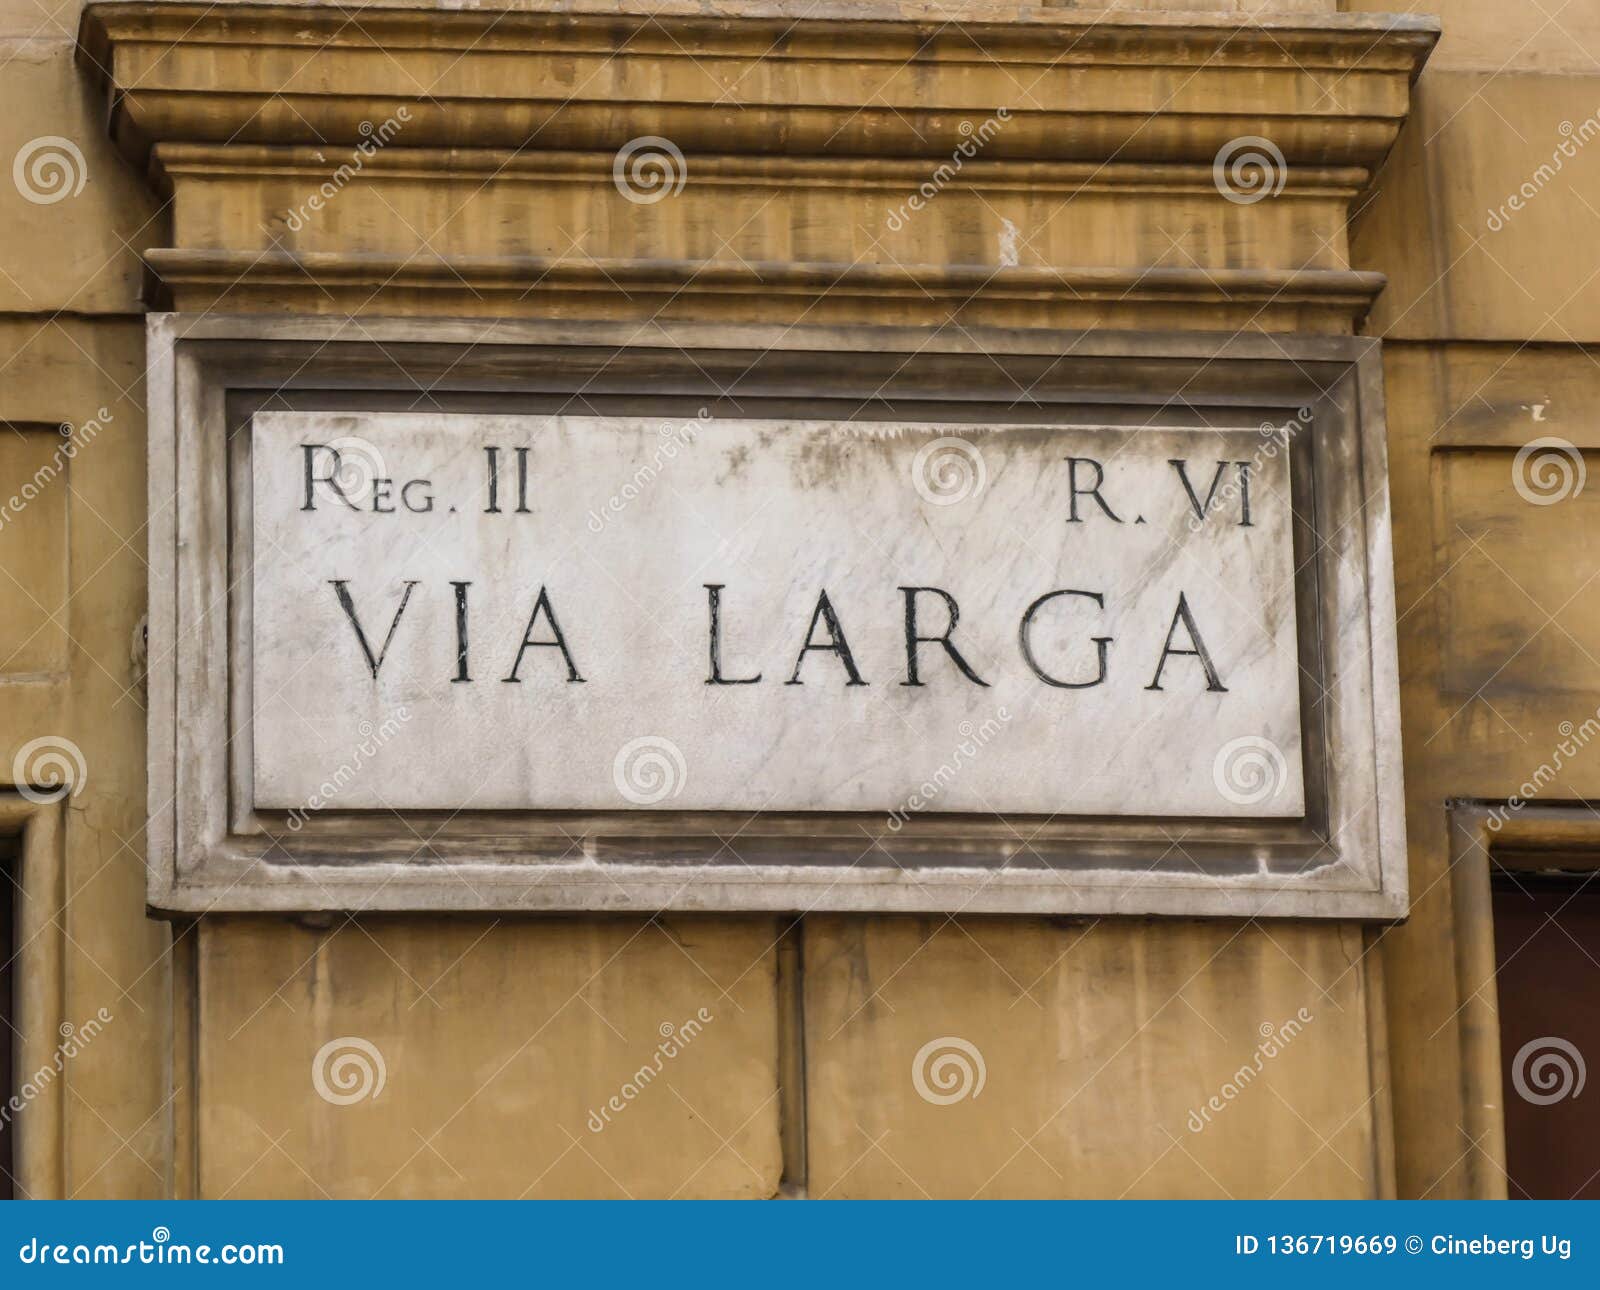 street name sign of via larga in rome, italy